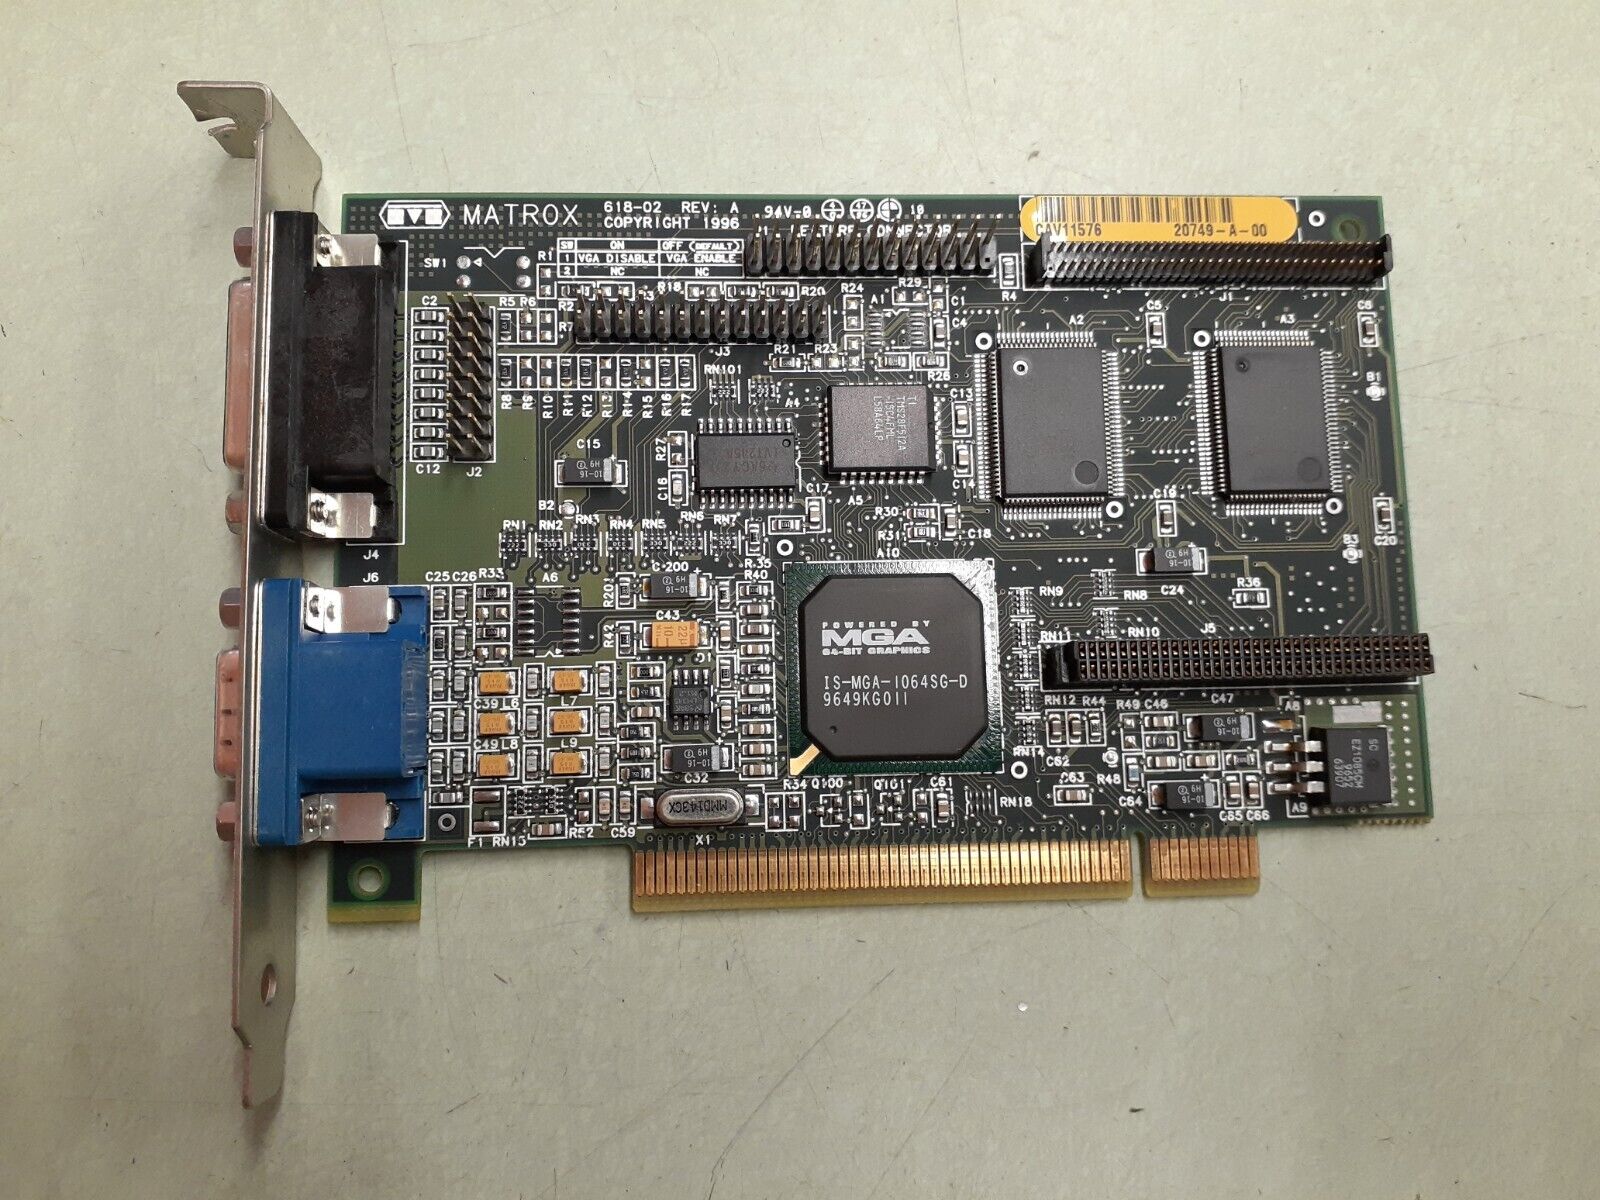 MATROX MGA-MYST/2I 2MB SDRAM PCI VGA 618-02 REV A CARD